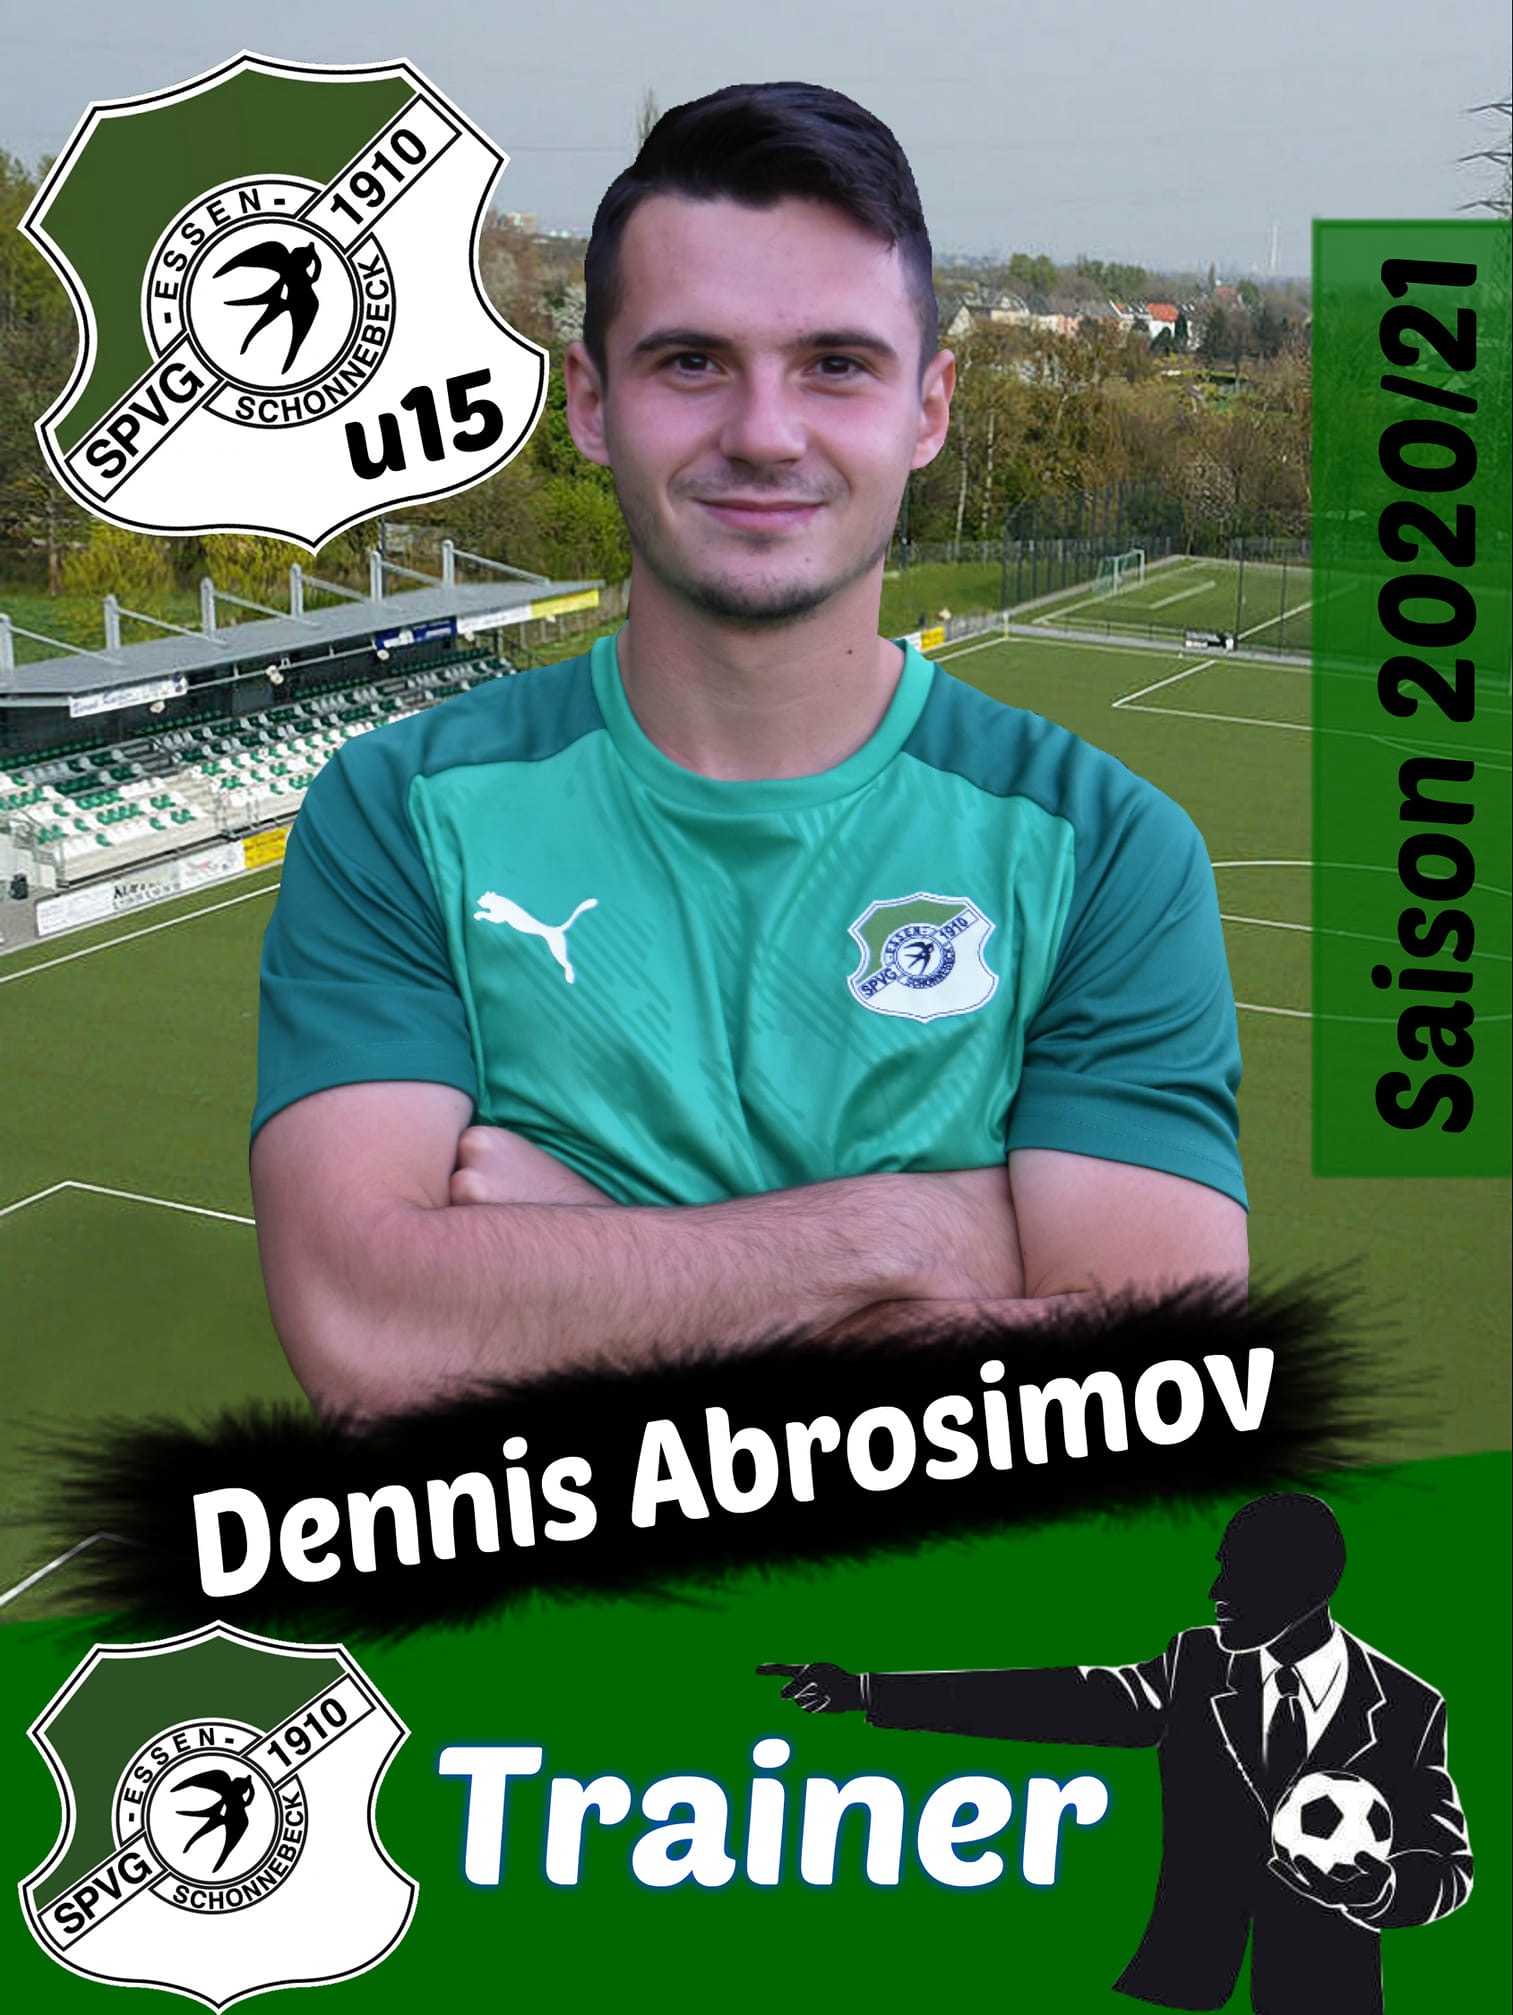 Abrosimov neuer Trainer der U15 post thumbnail image